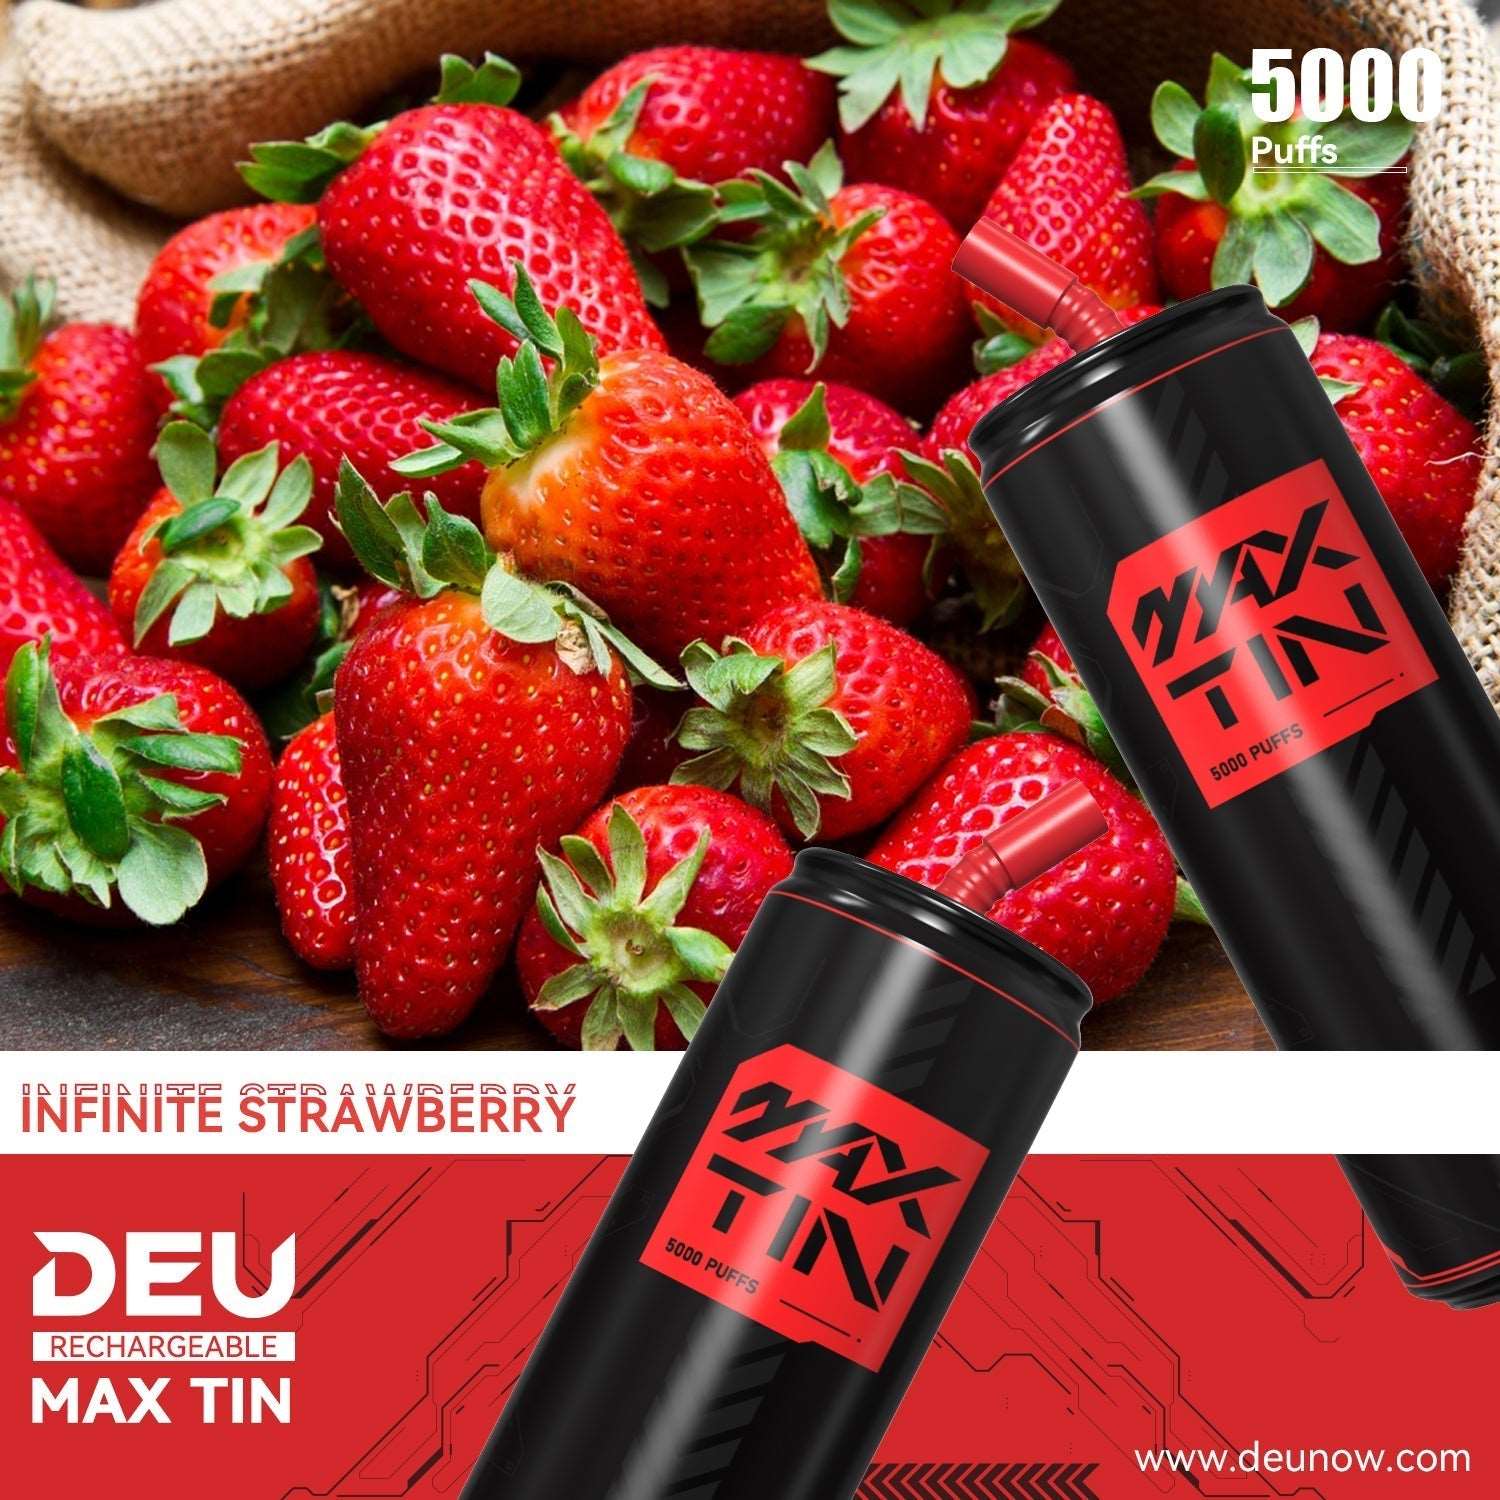 DEU MAX TIN - Infinite Strawberry